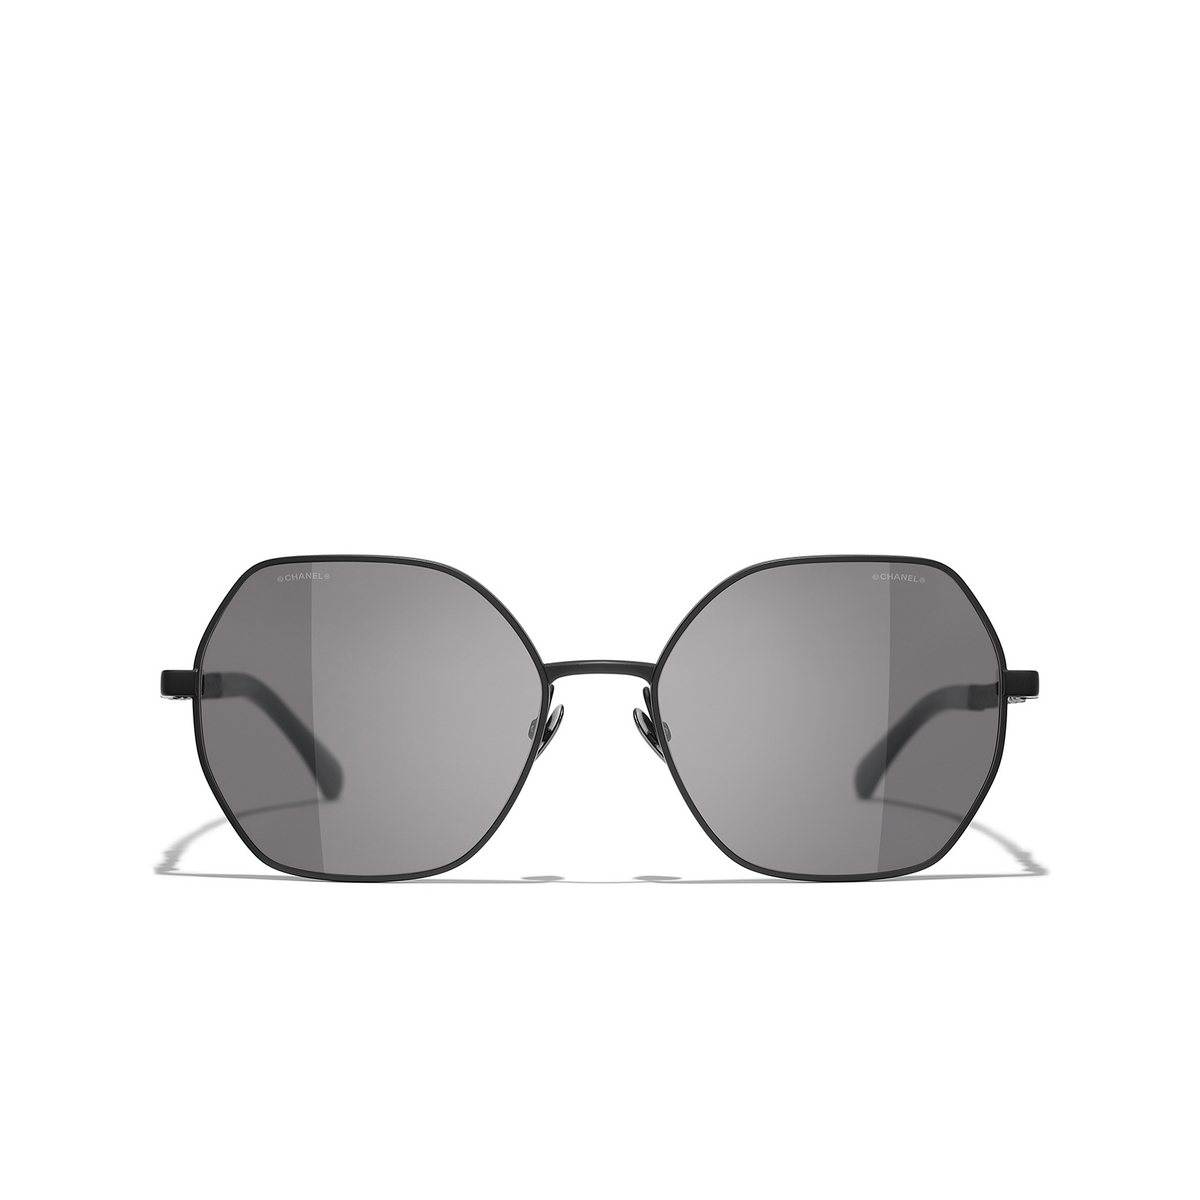 CHANEL square Sunglasses C101B1 Black - front view